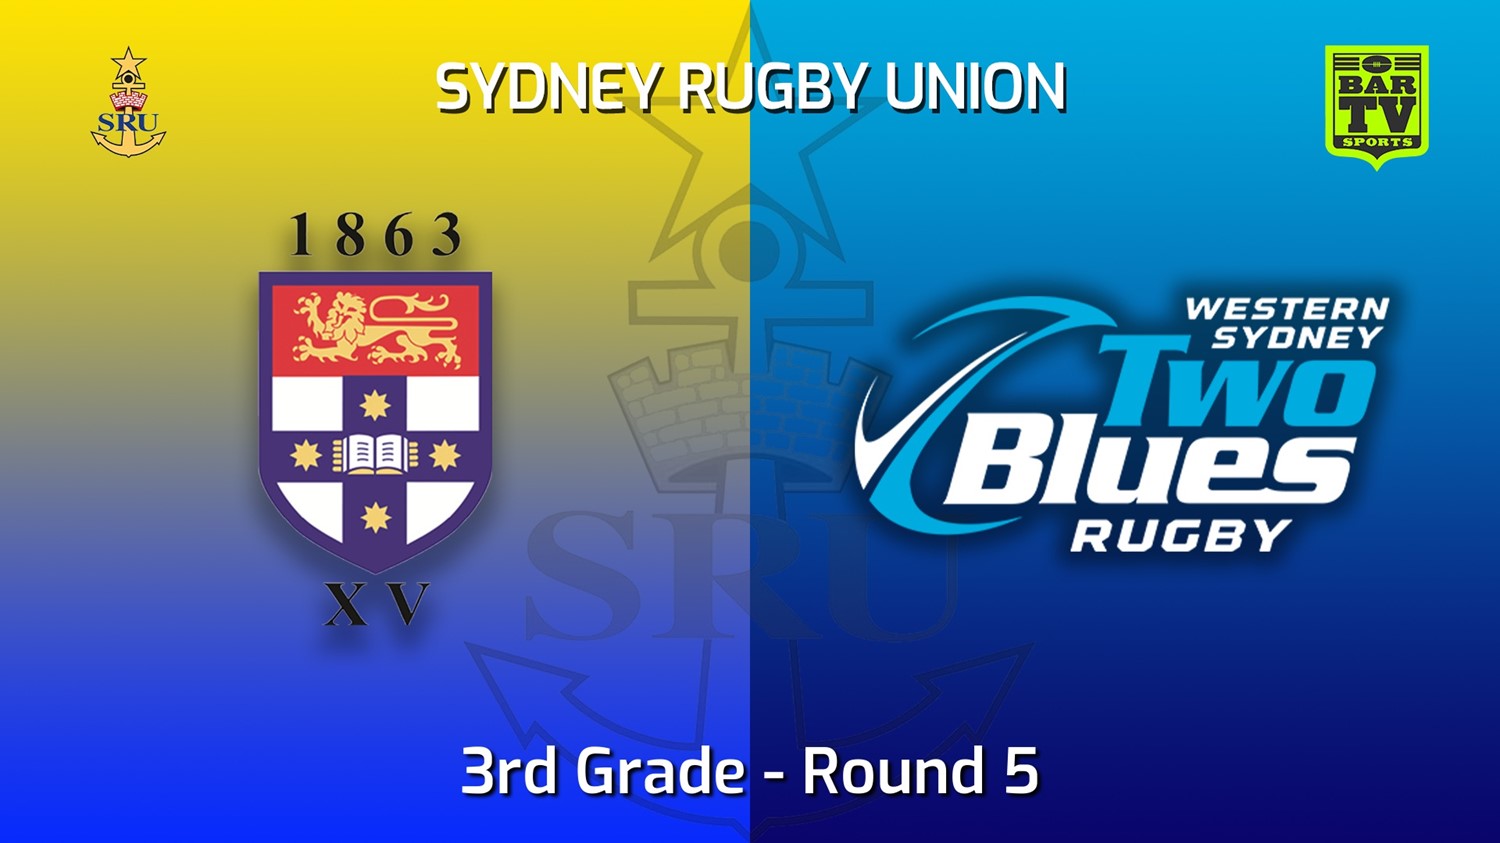 220430-Sydney Rugby Union Round 5 - 3rd Grade - Sydney University v Two Blues Slate Image